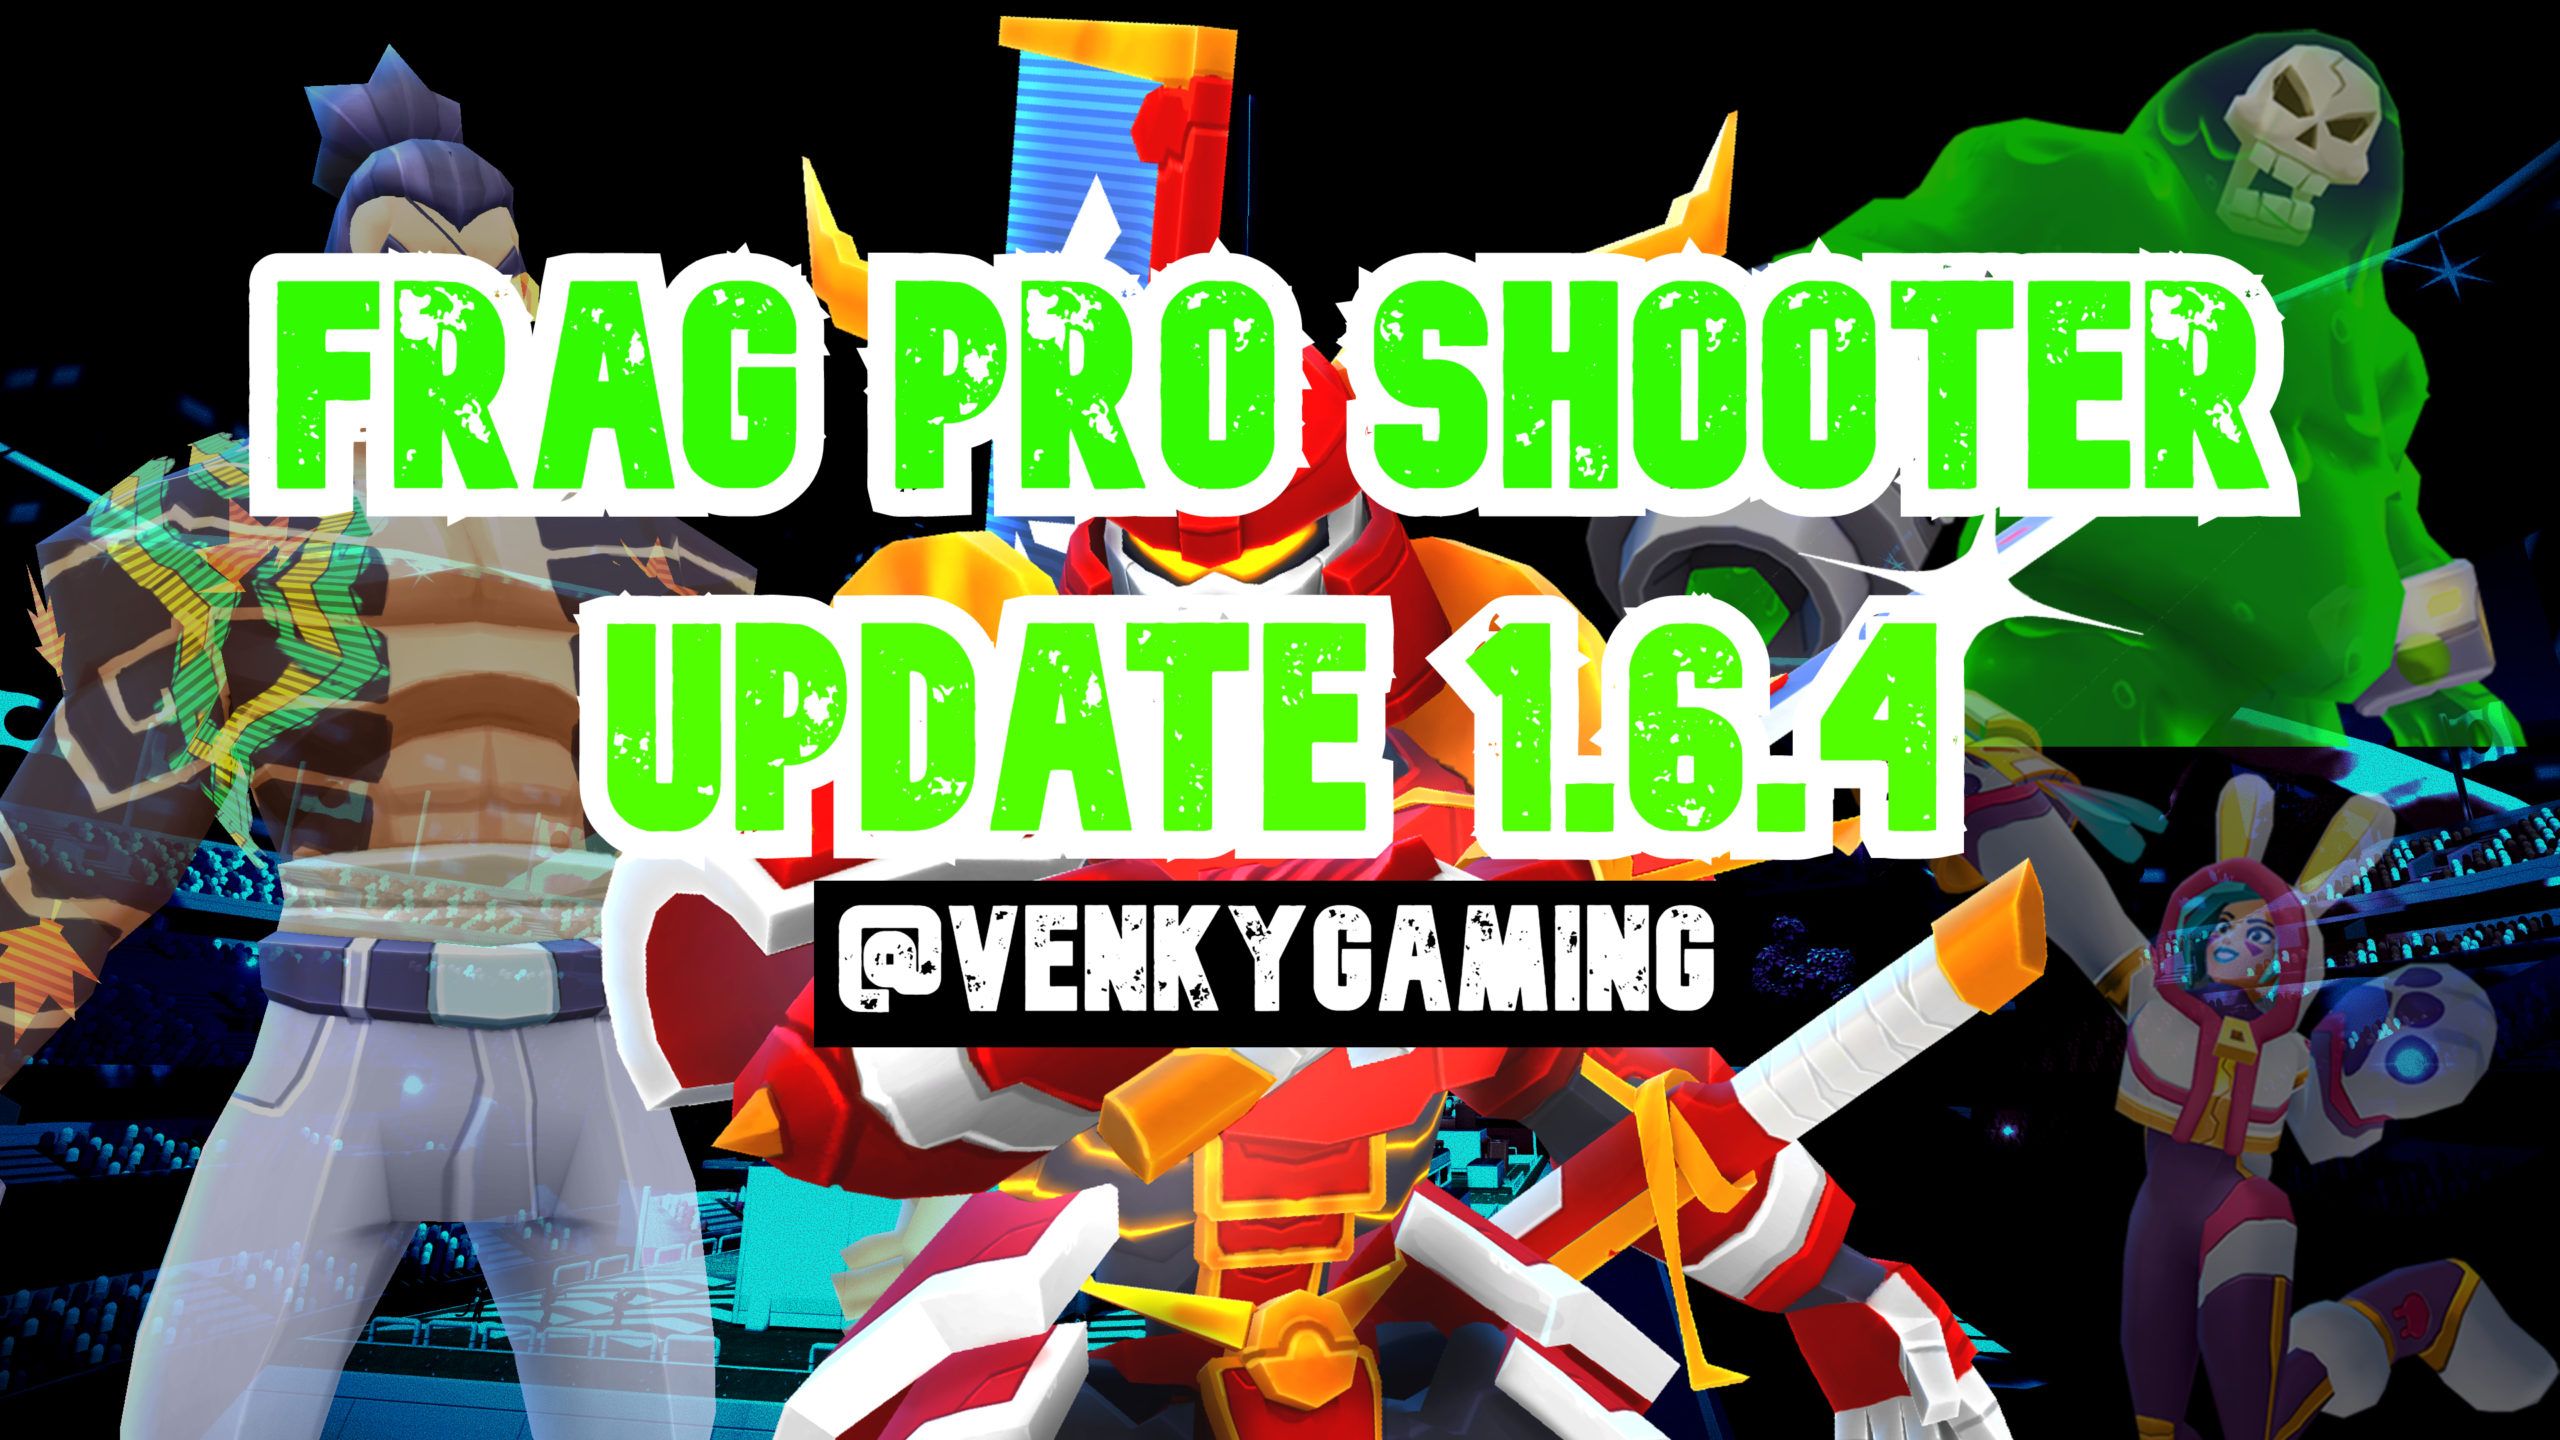 Frag Pro Shooter Latest Update. Update 1.6.4 in June 2020